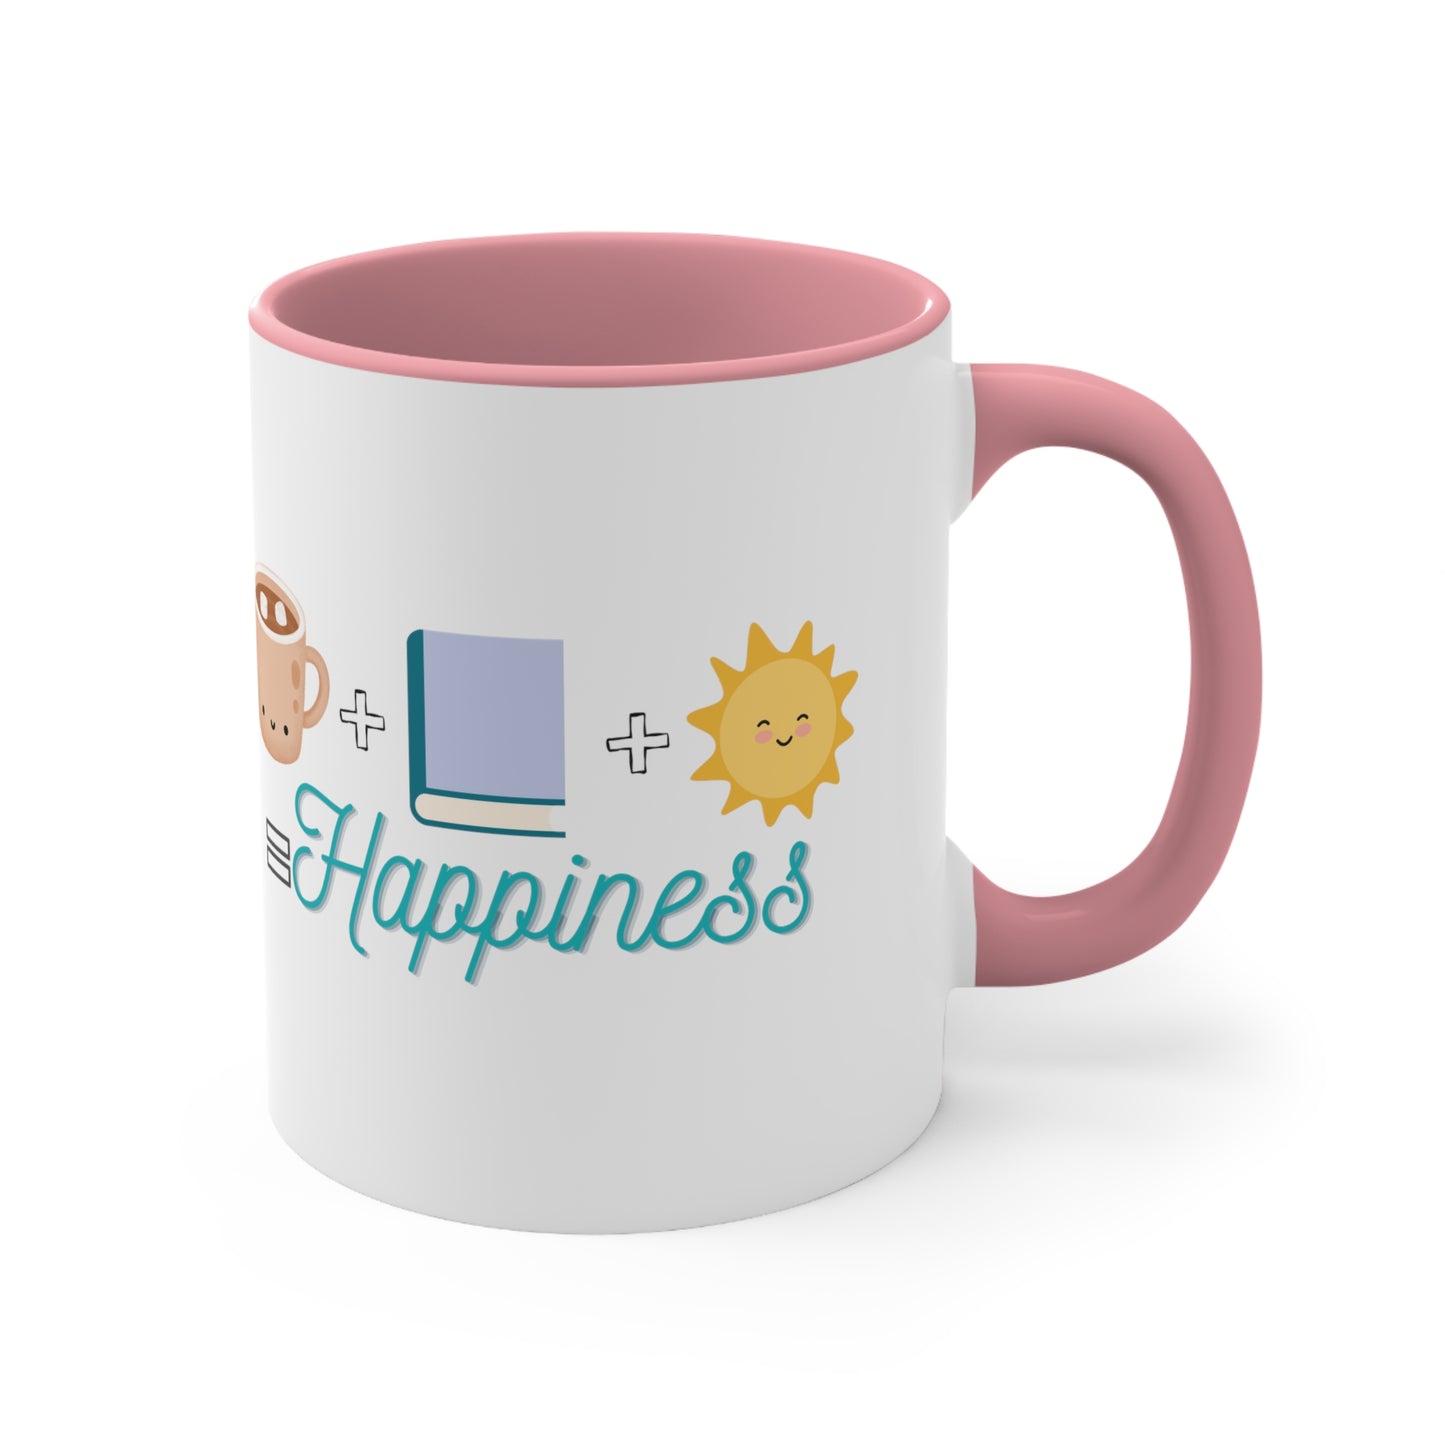 Happiness is a Good Book Coffee Mug, 11oz